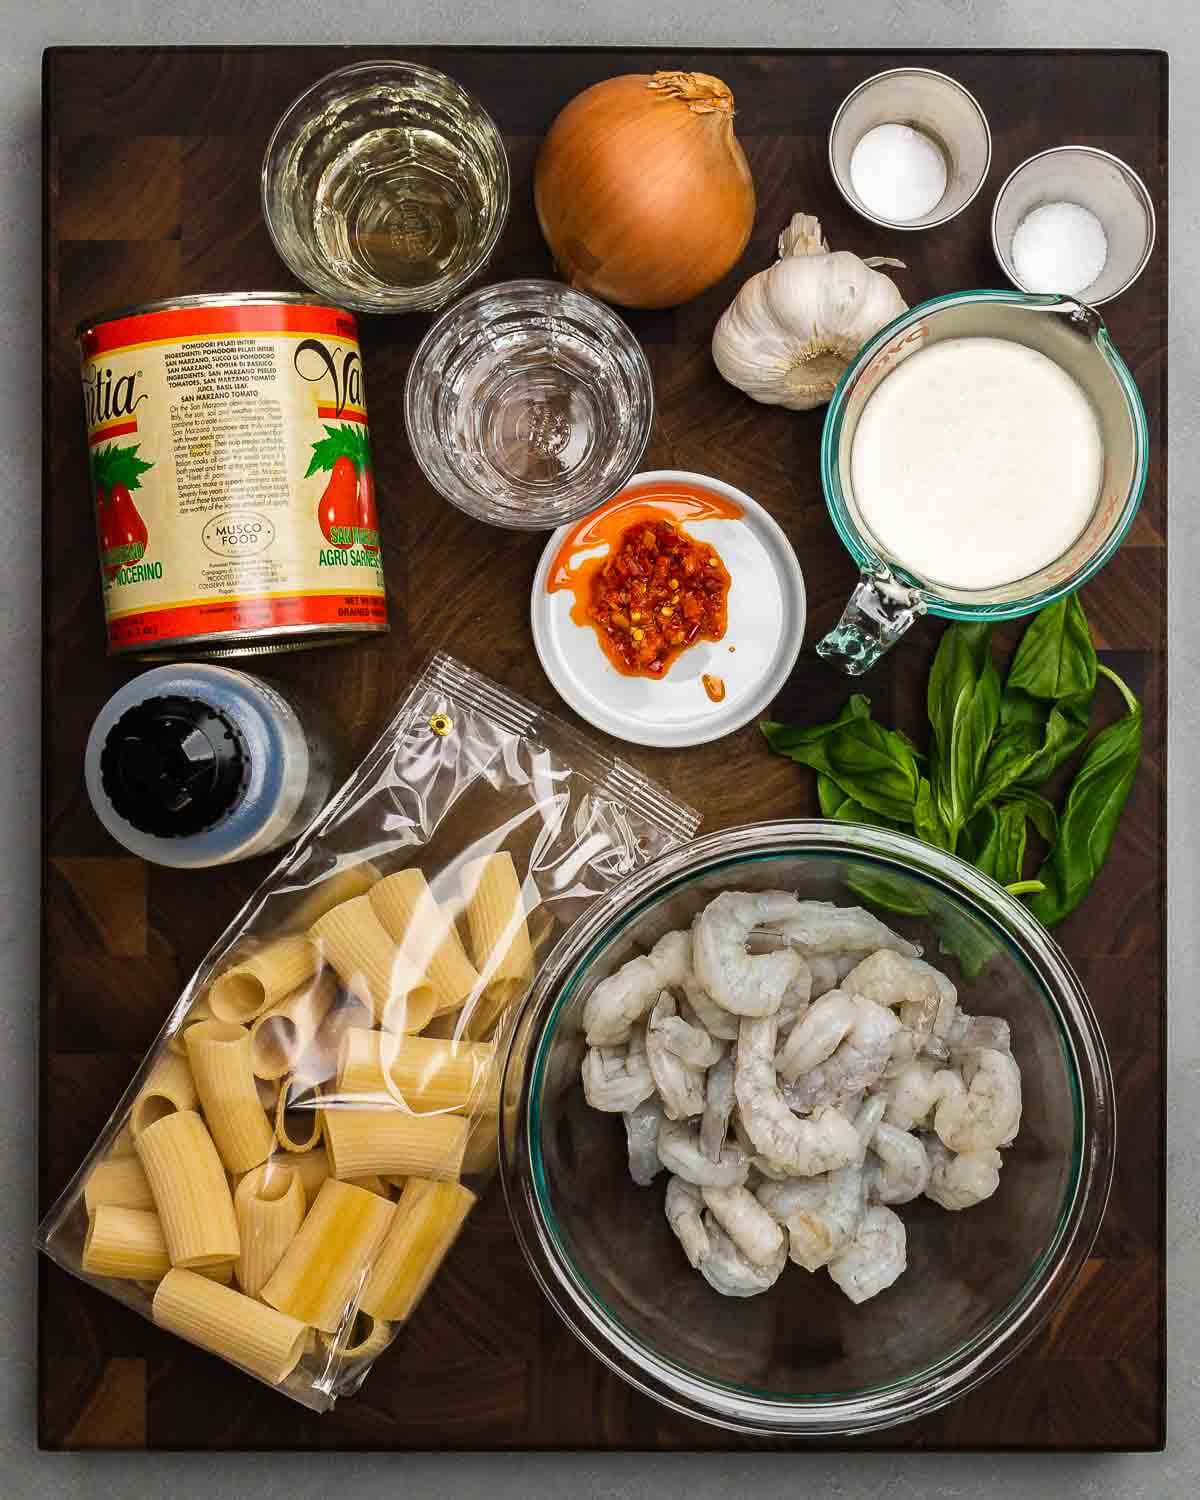 Ingredients shown: tomatoes, white wine, vodka, garlic, salt, baking soda, Calabrian chili paste, heavy cream, olive oil, rigatoni, basil, and shrimp.